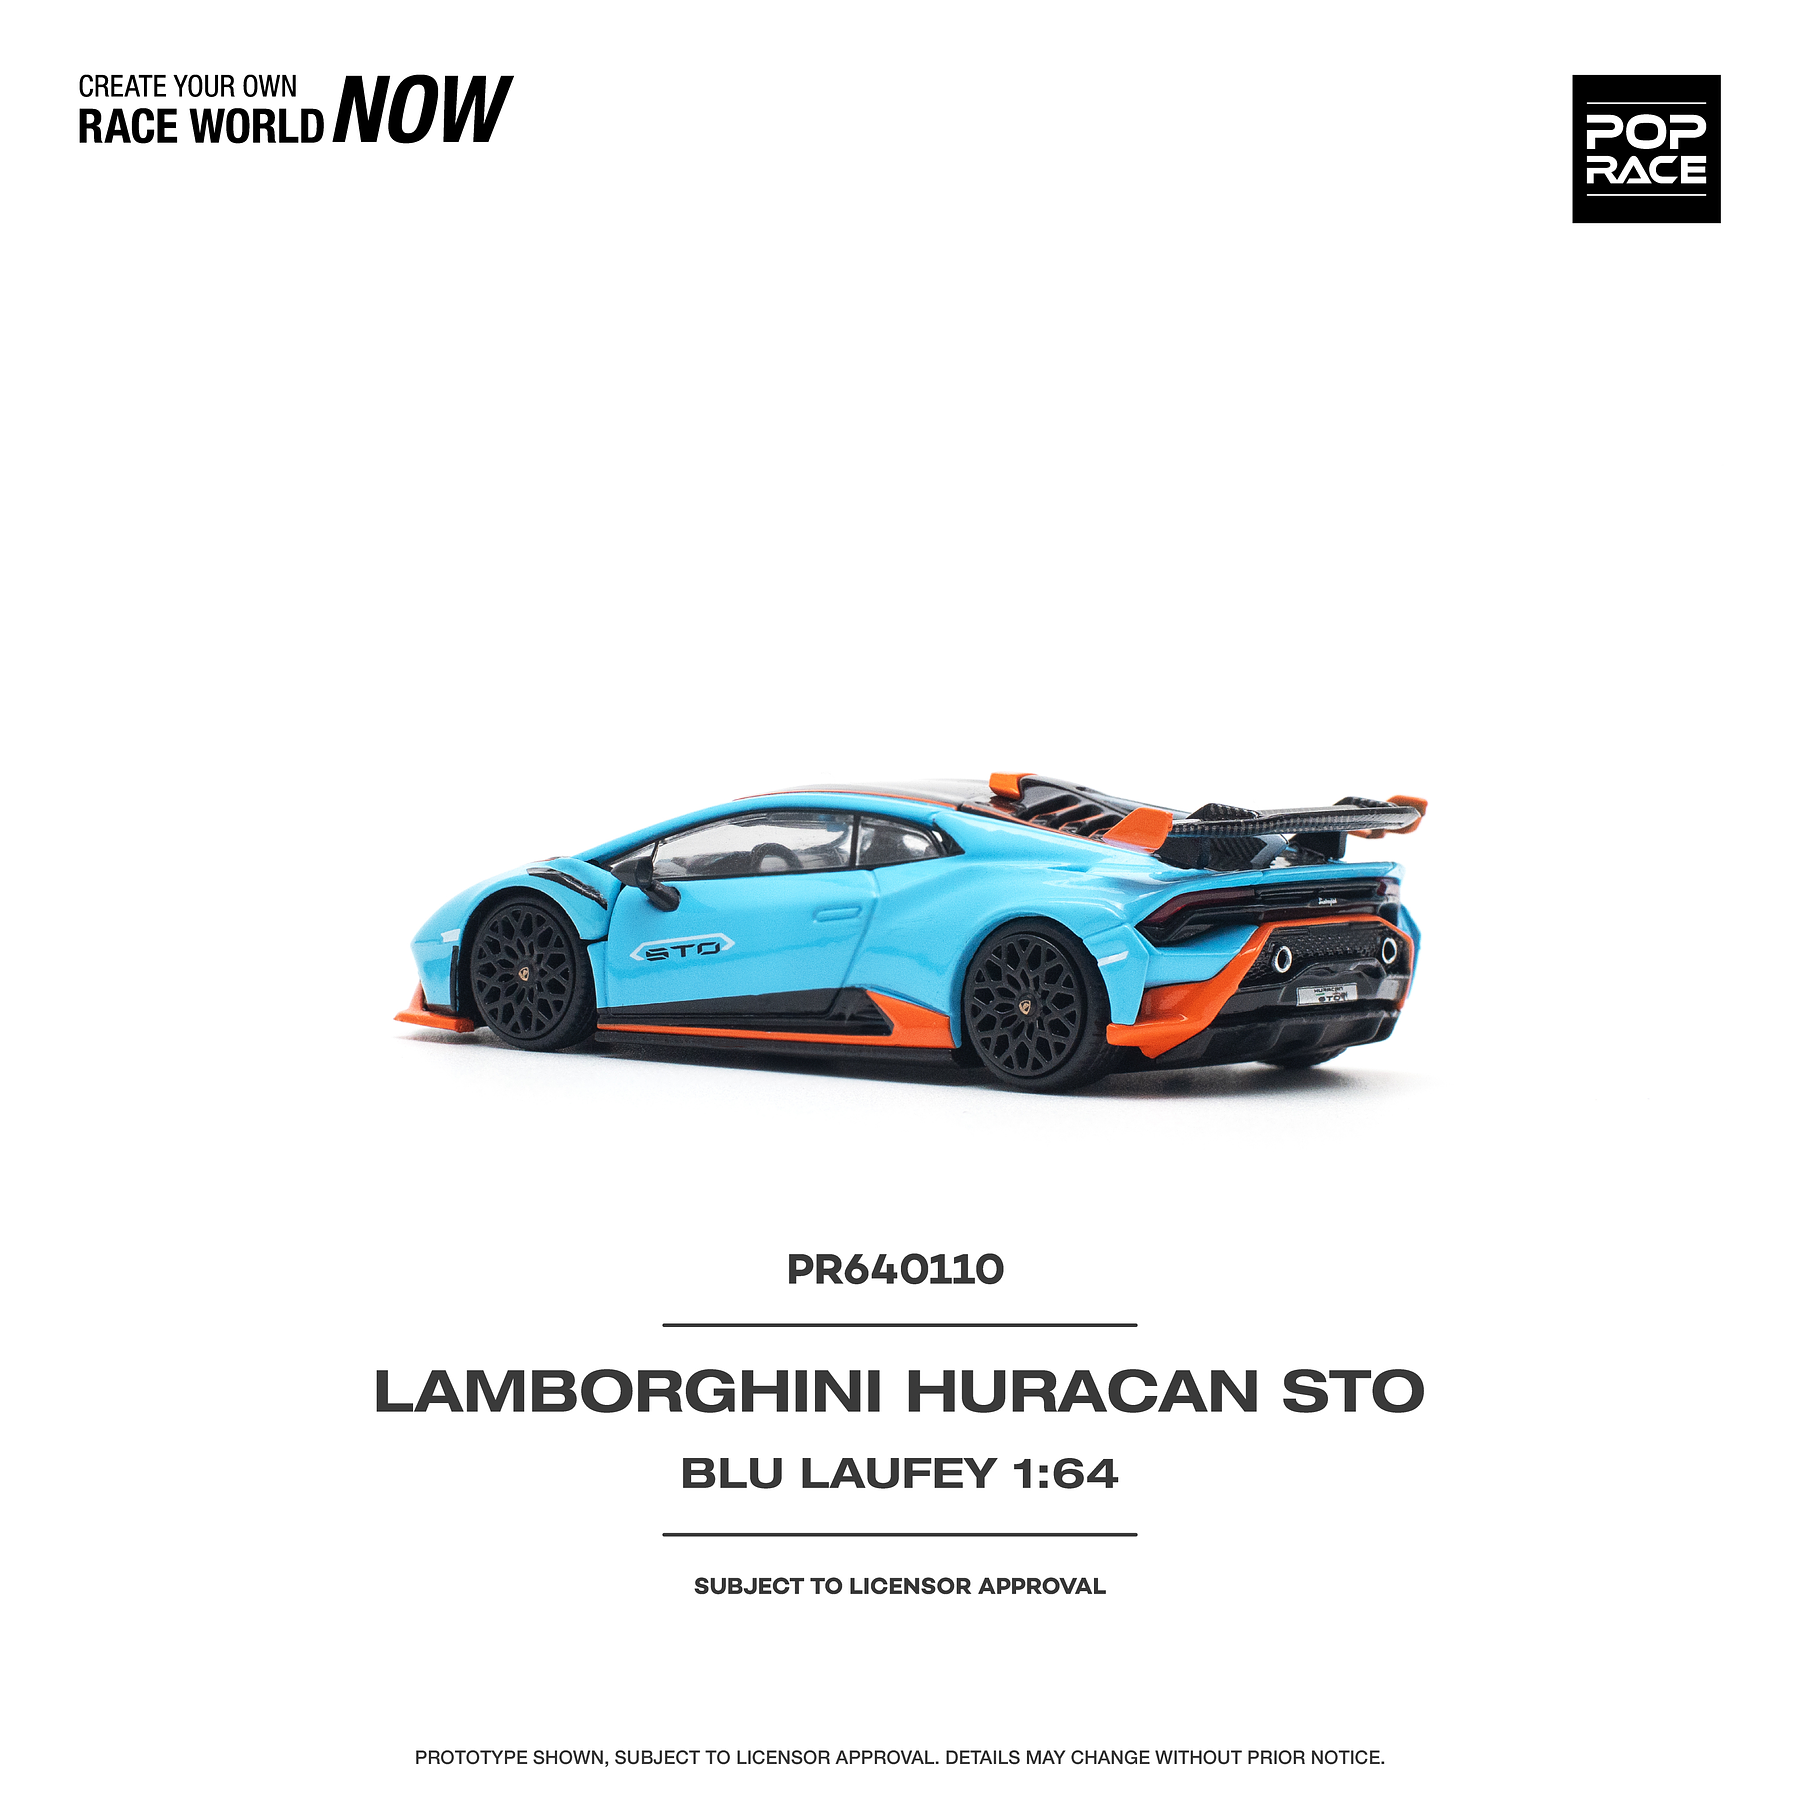 PREVENTA Pop Race 1:64 Lamborghini Huracán STO BLU LAUFEY/ARANCIO XANTO